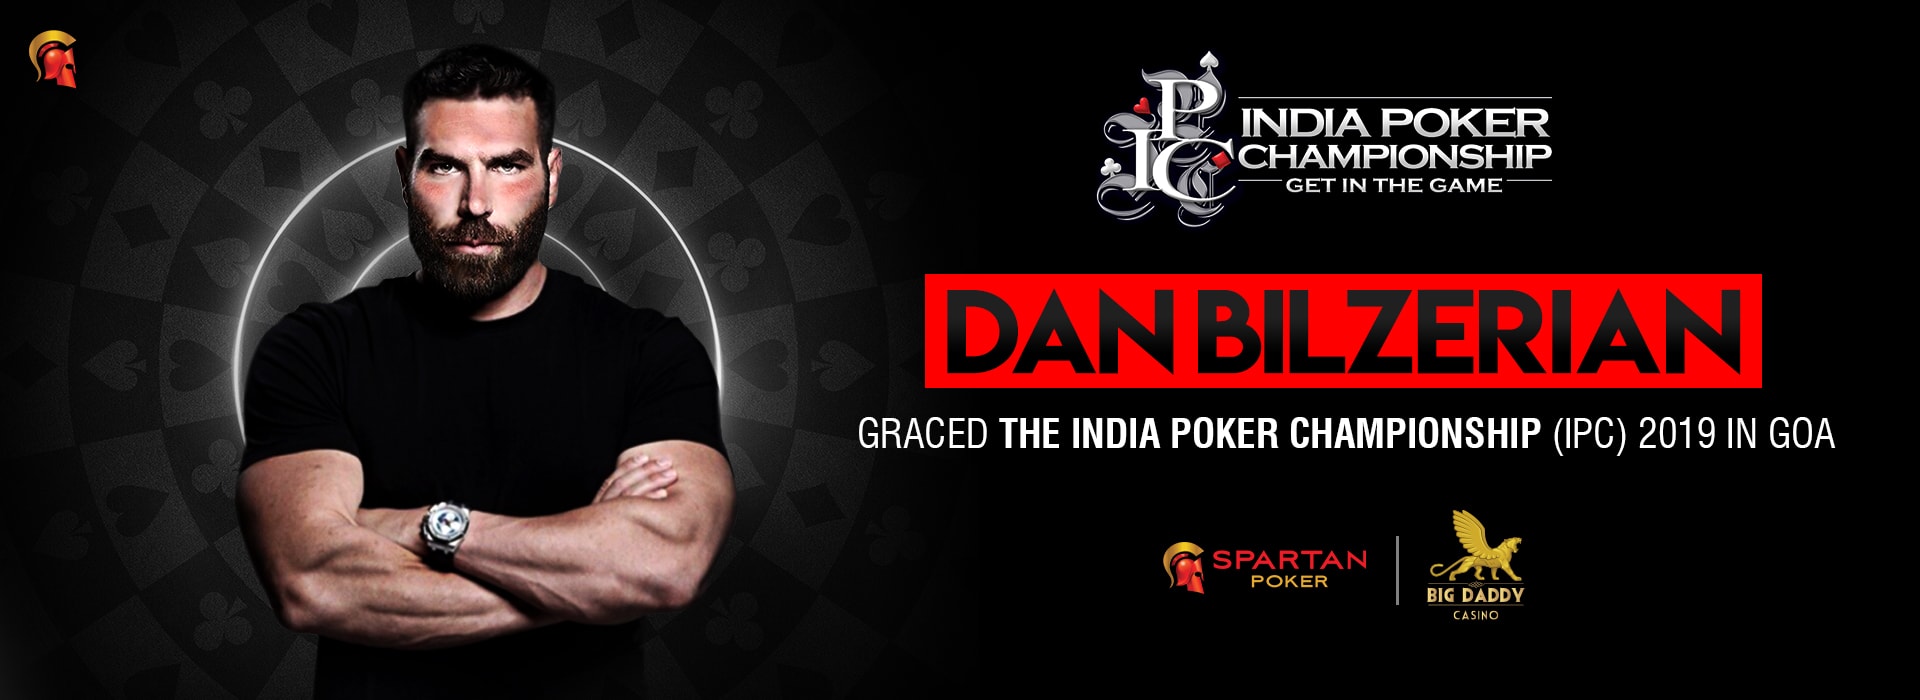 Dan Bilzerian graces India Poker Championship